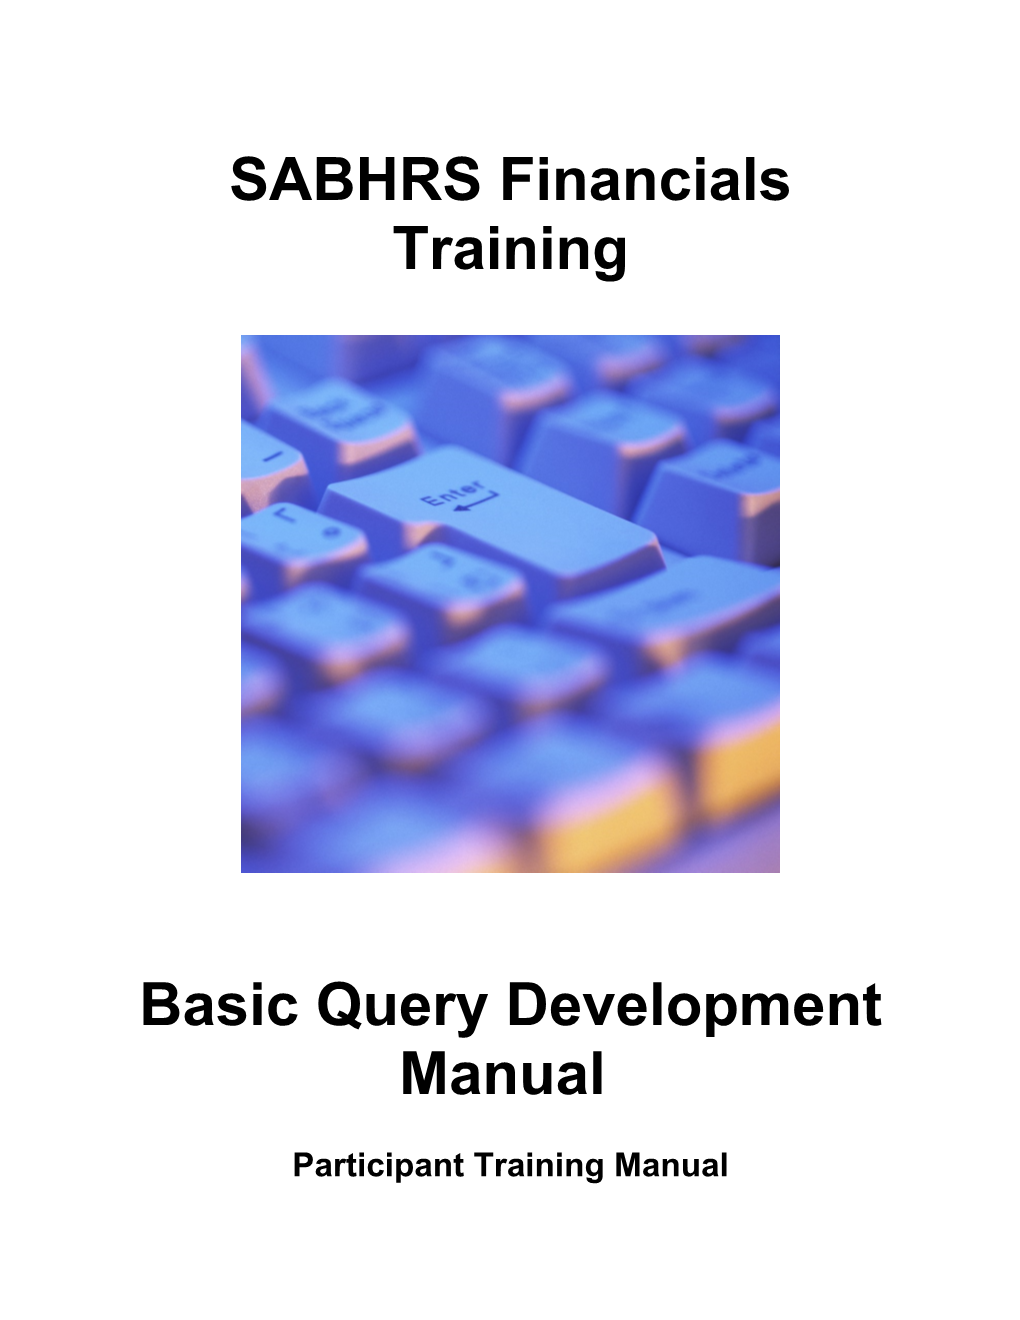 SABHRS Financials Training